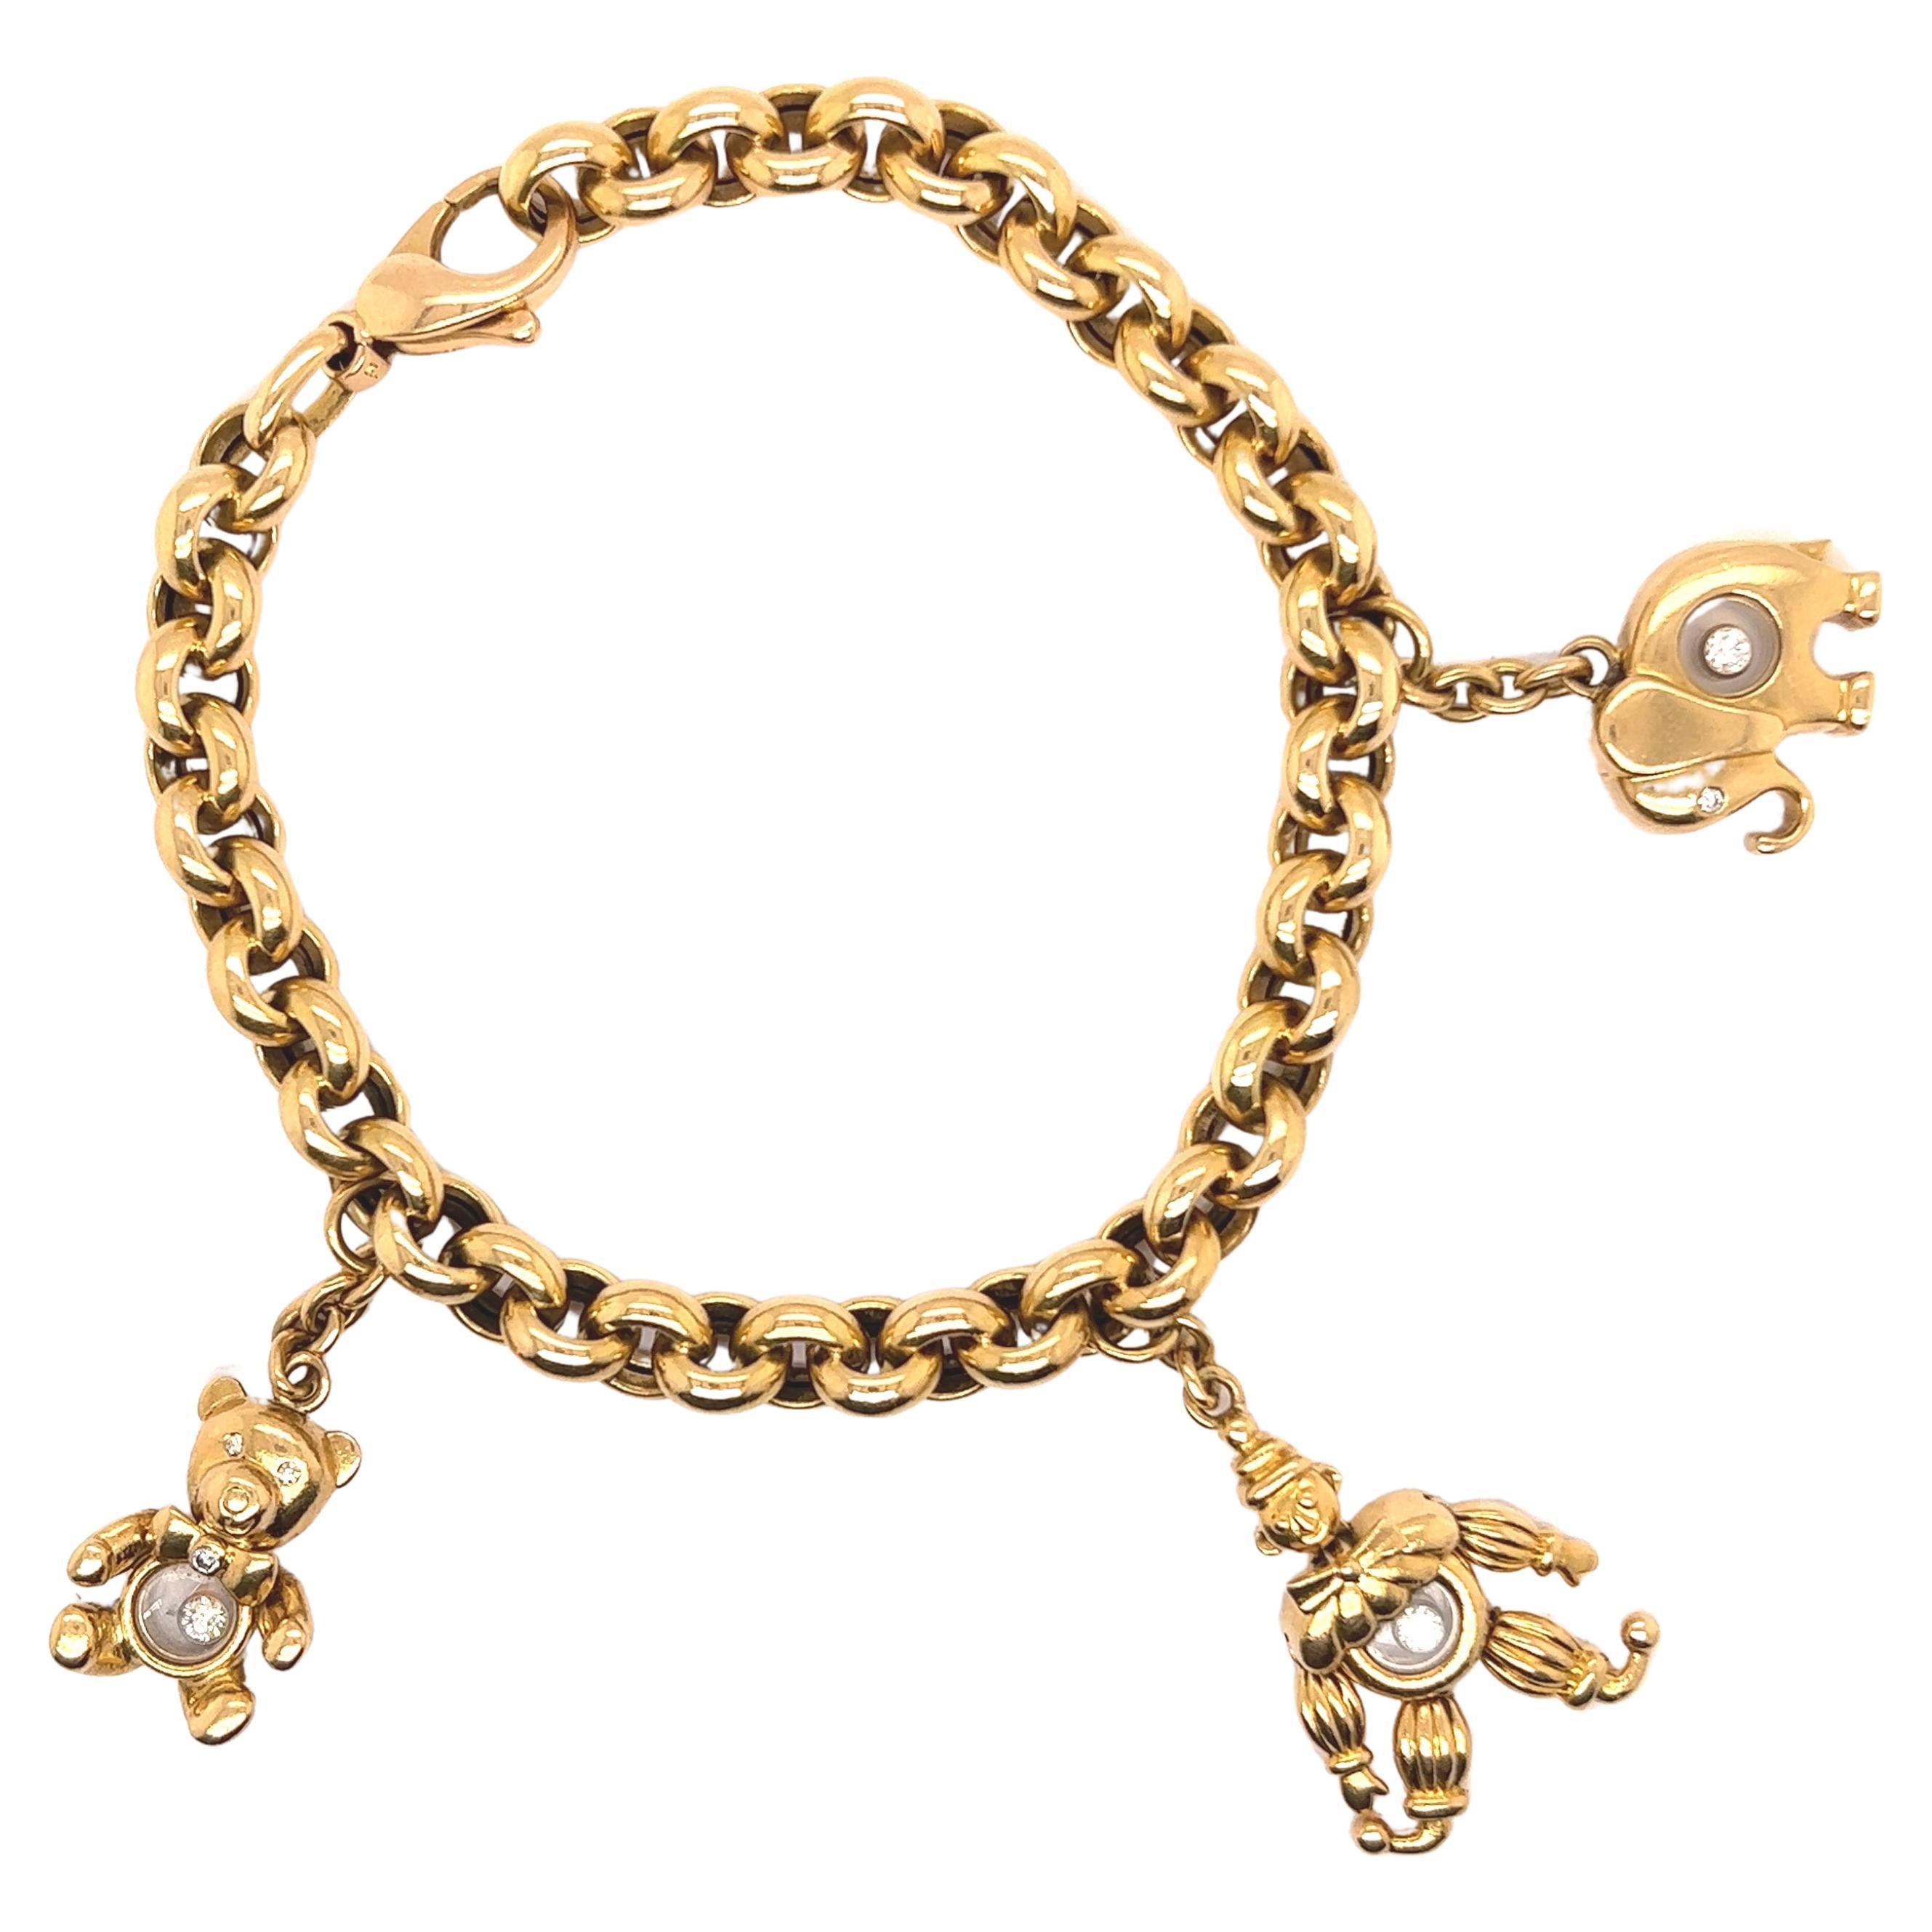 Vintage Chopard Diamond 18 Karat Gold “Happy Diamonds” Charm Bracelet